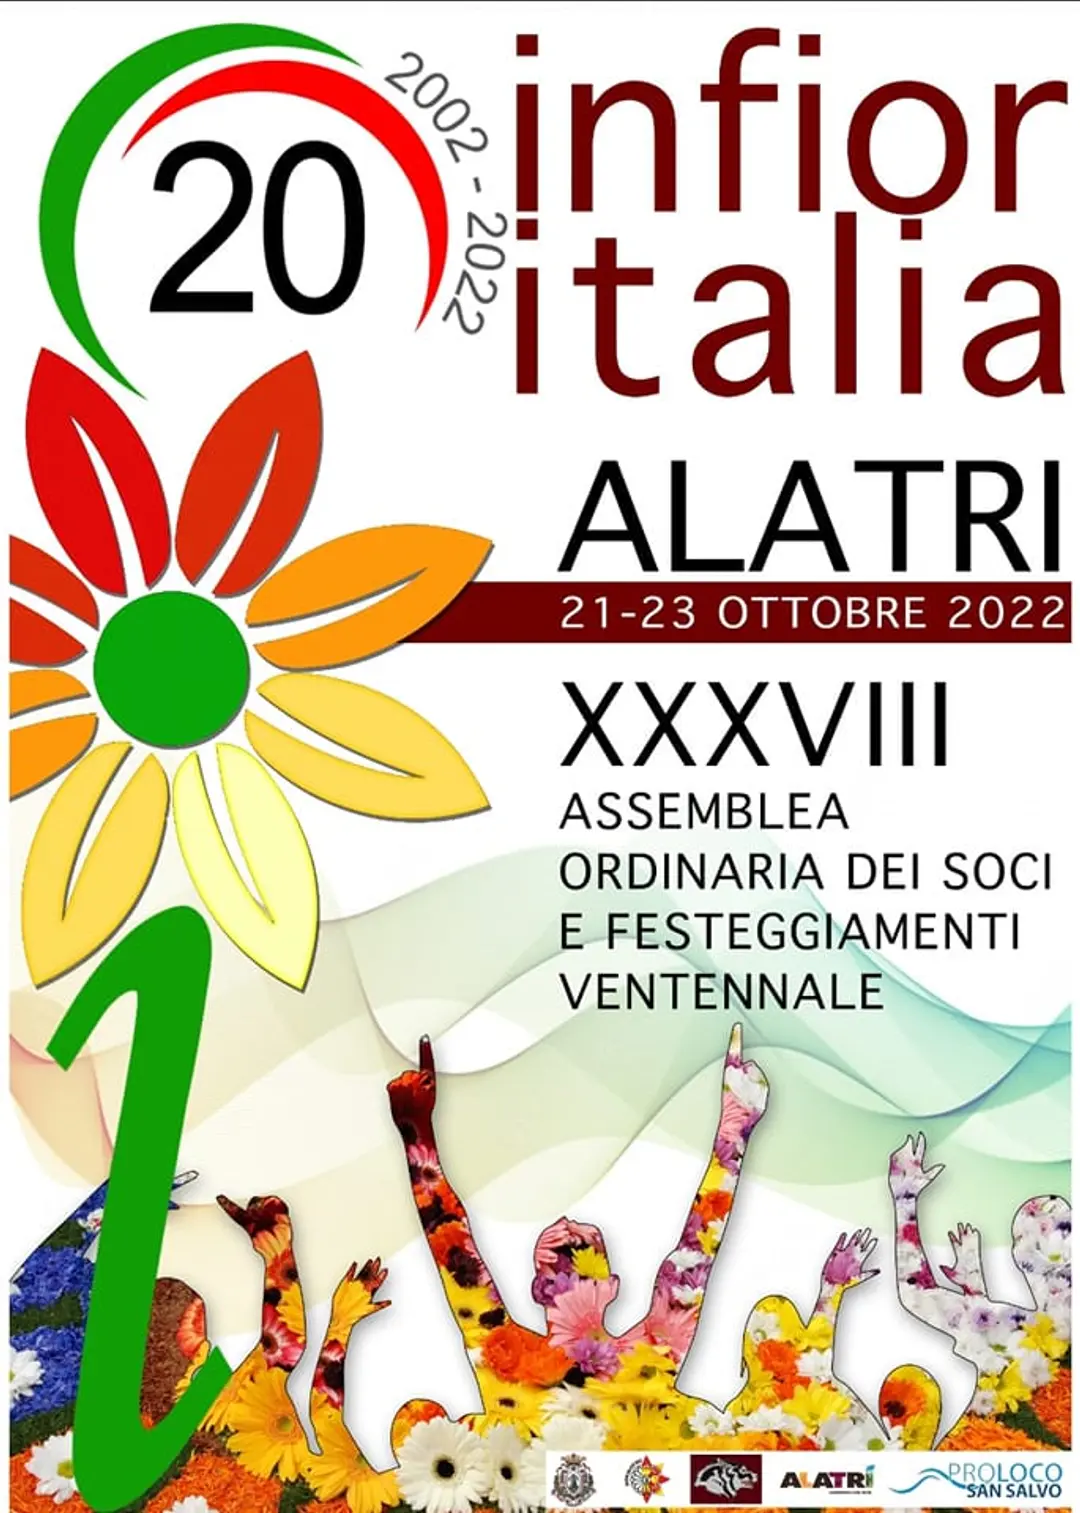 38ᵃ ASSEMBLEA SOCI INFIORITALIA - Alatri (FR) - dal 21 al 23 ottobre 2022